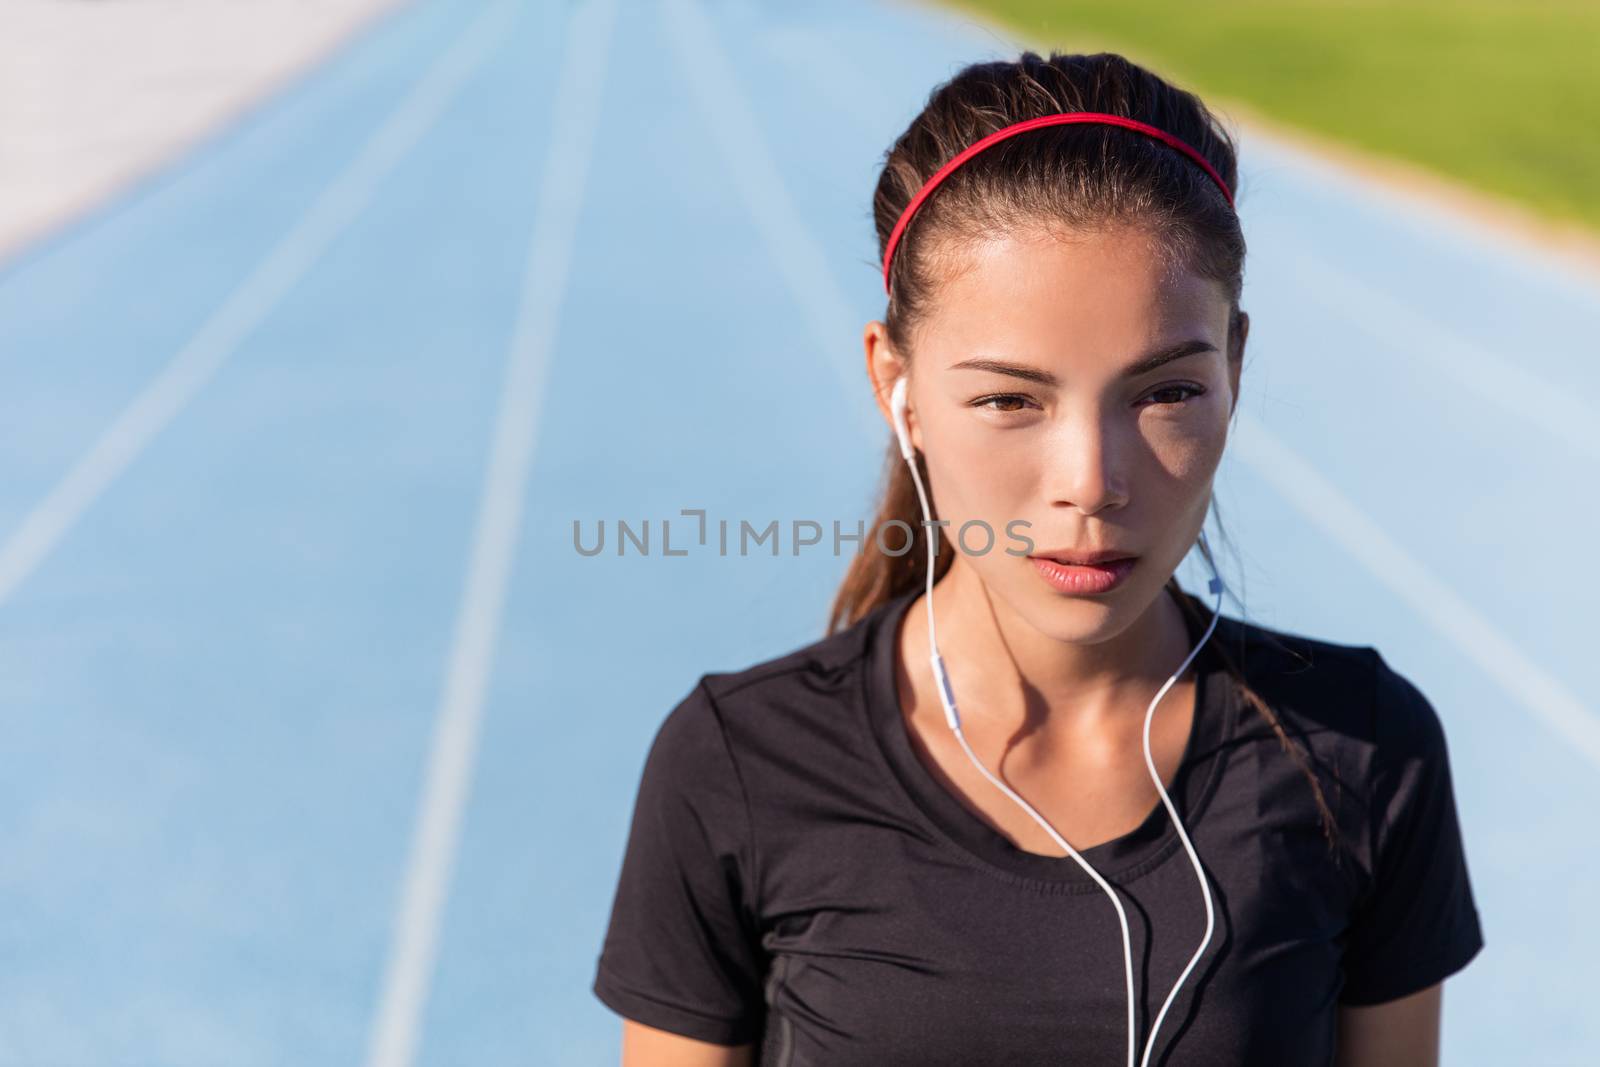 Runner woman listening to run music with earphones by Maridav